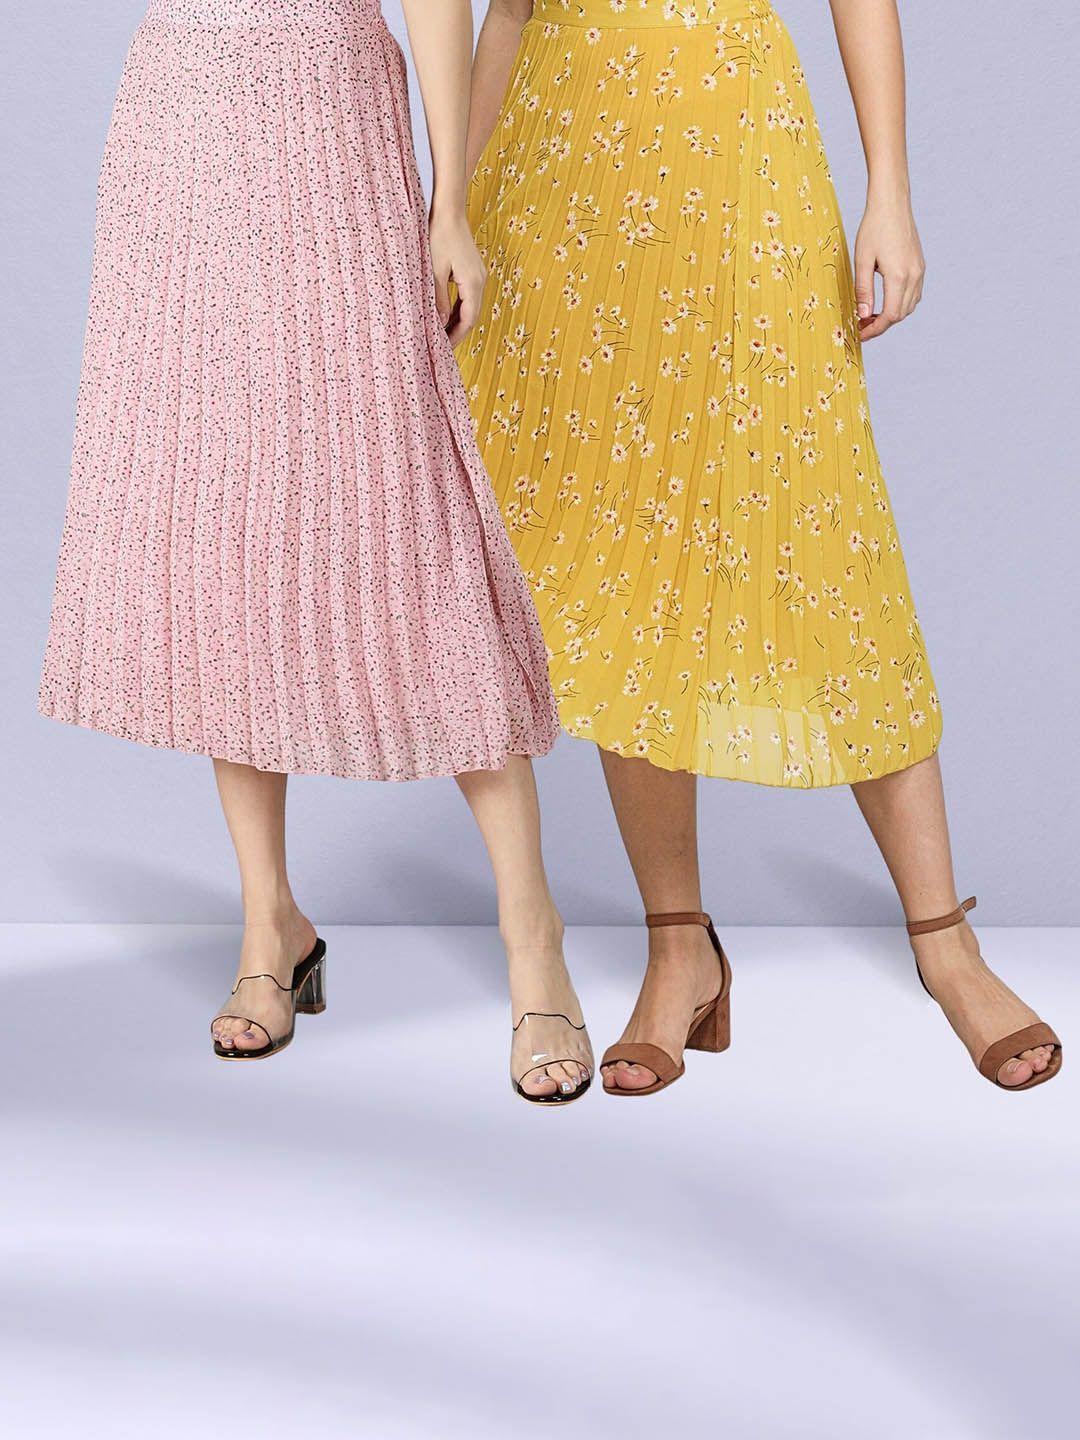 nuevosdamas pack of 2 floral printed georgette midi skirts